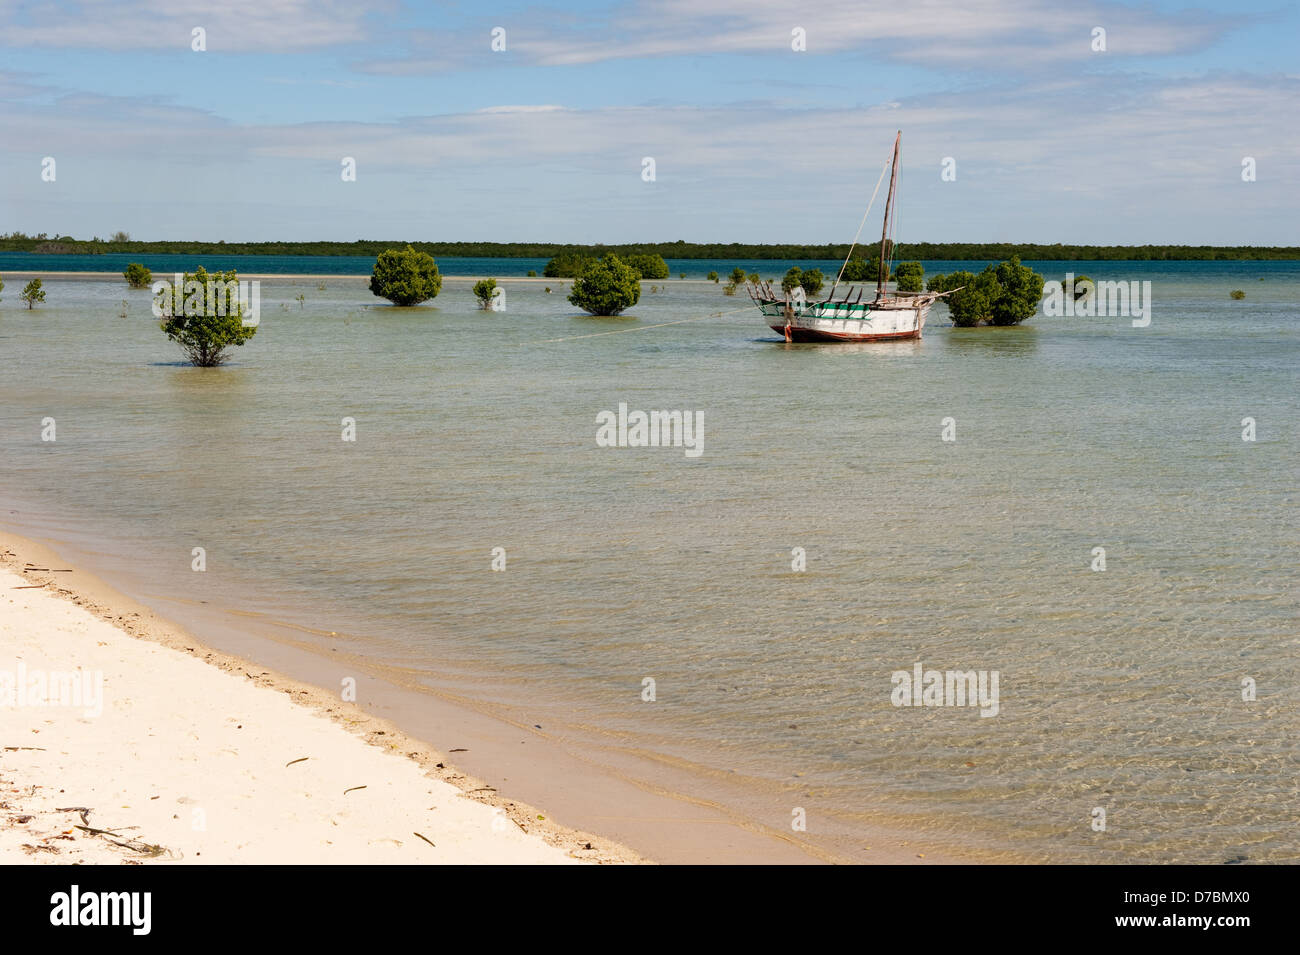 Dhau zwischen den Mangroven, Ibo Insel Mosambik Stockfoto